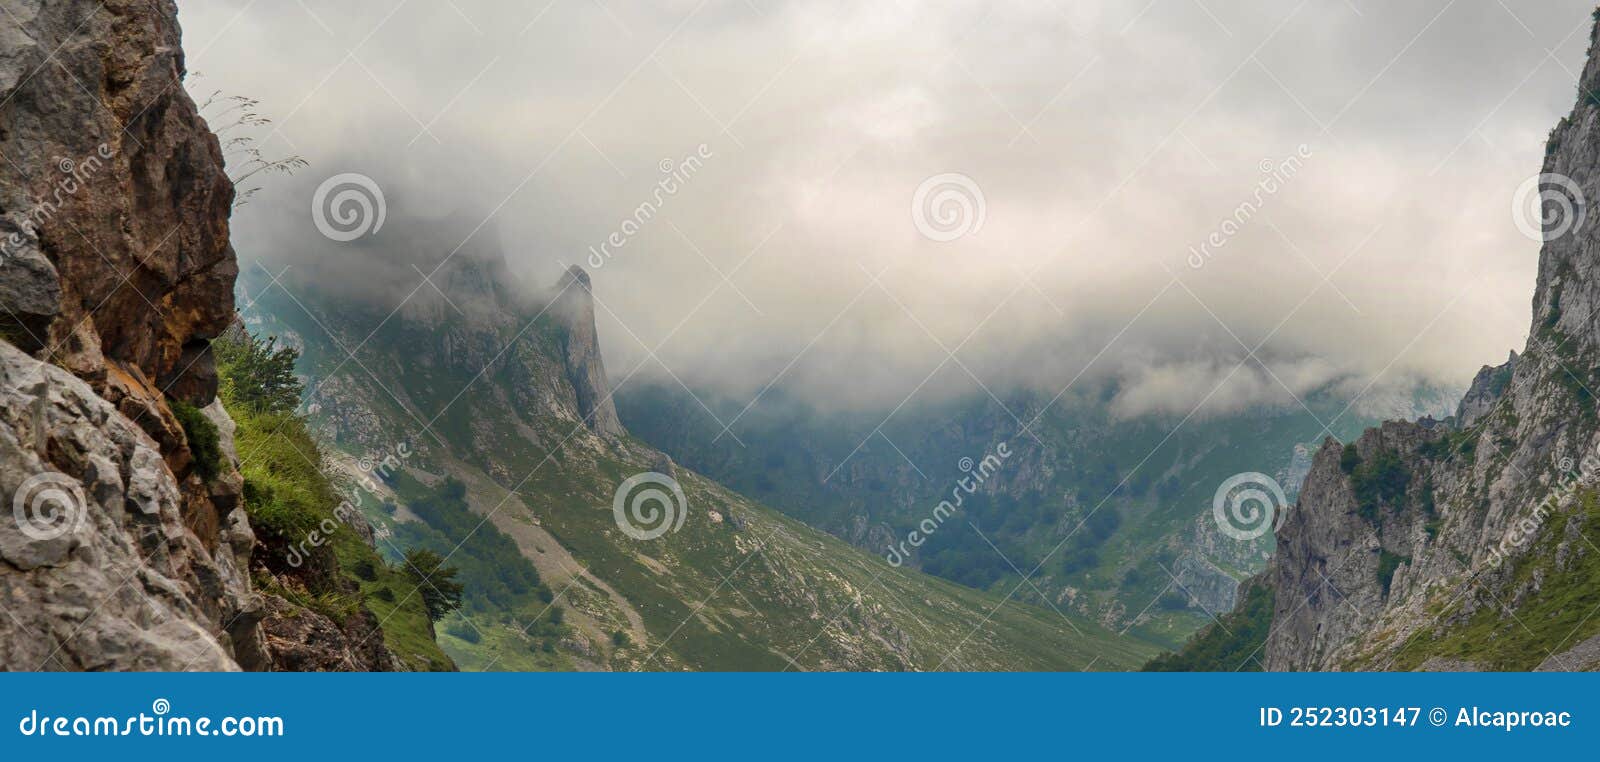 collado pandÃÂ©bano, picos de europa national park, asturias, spain